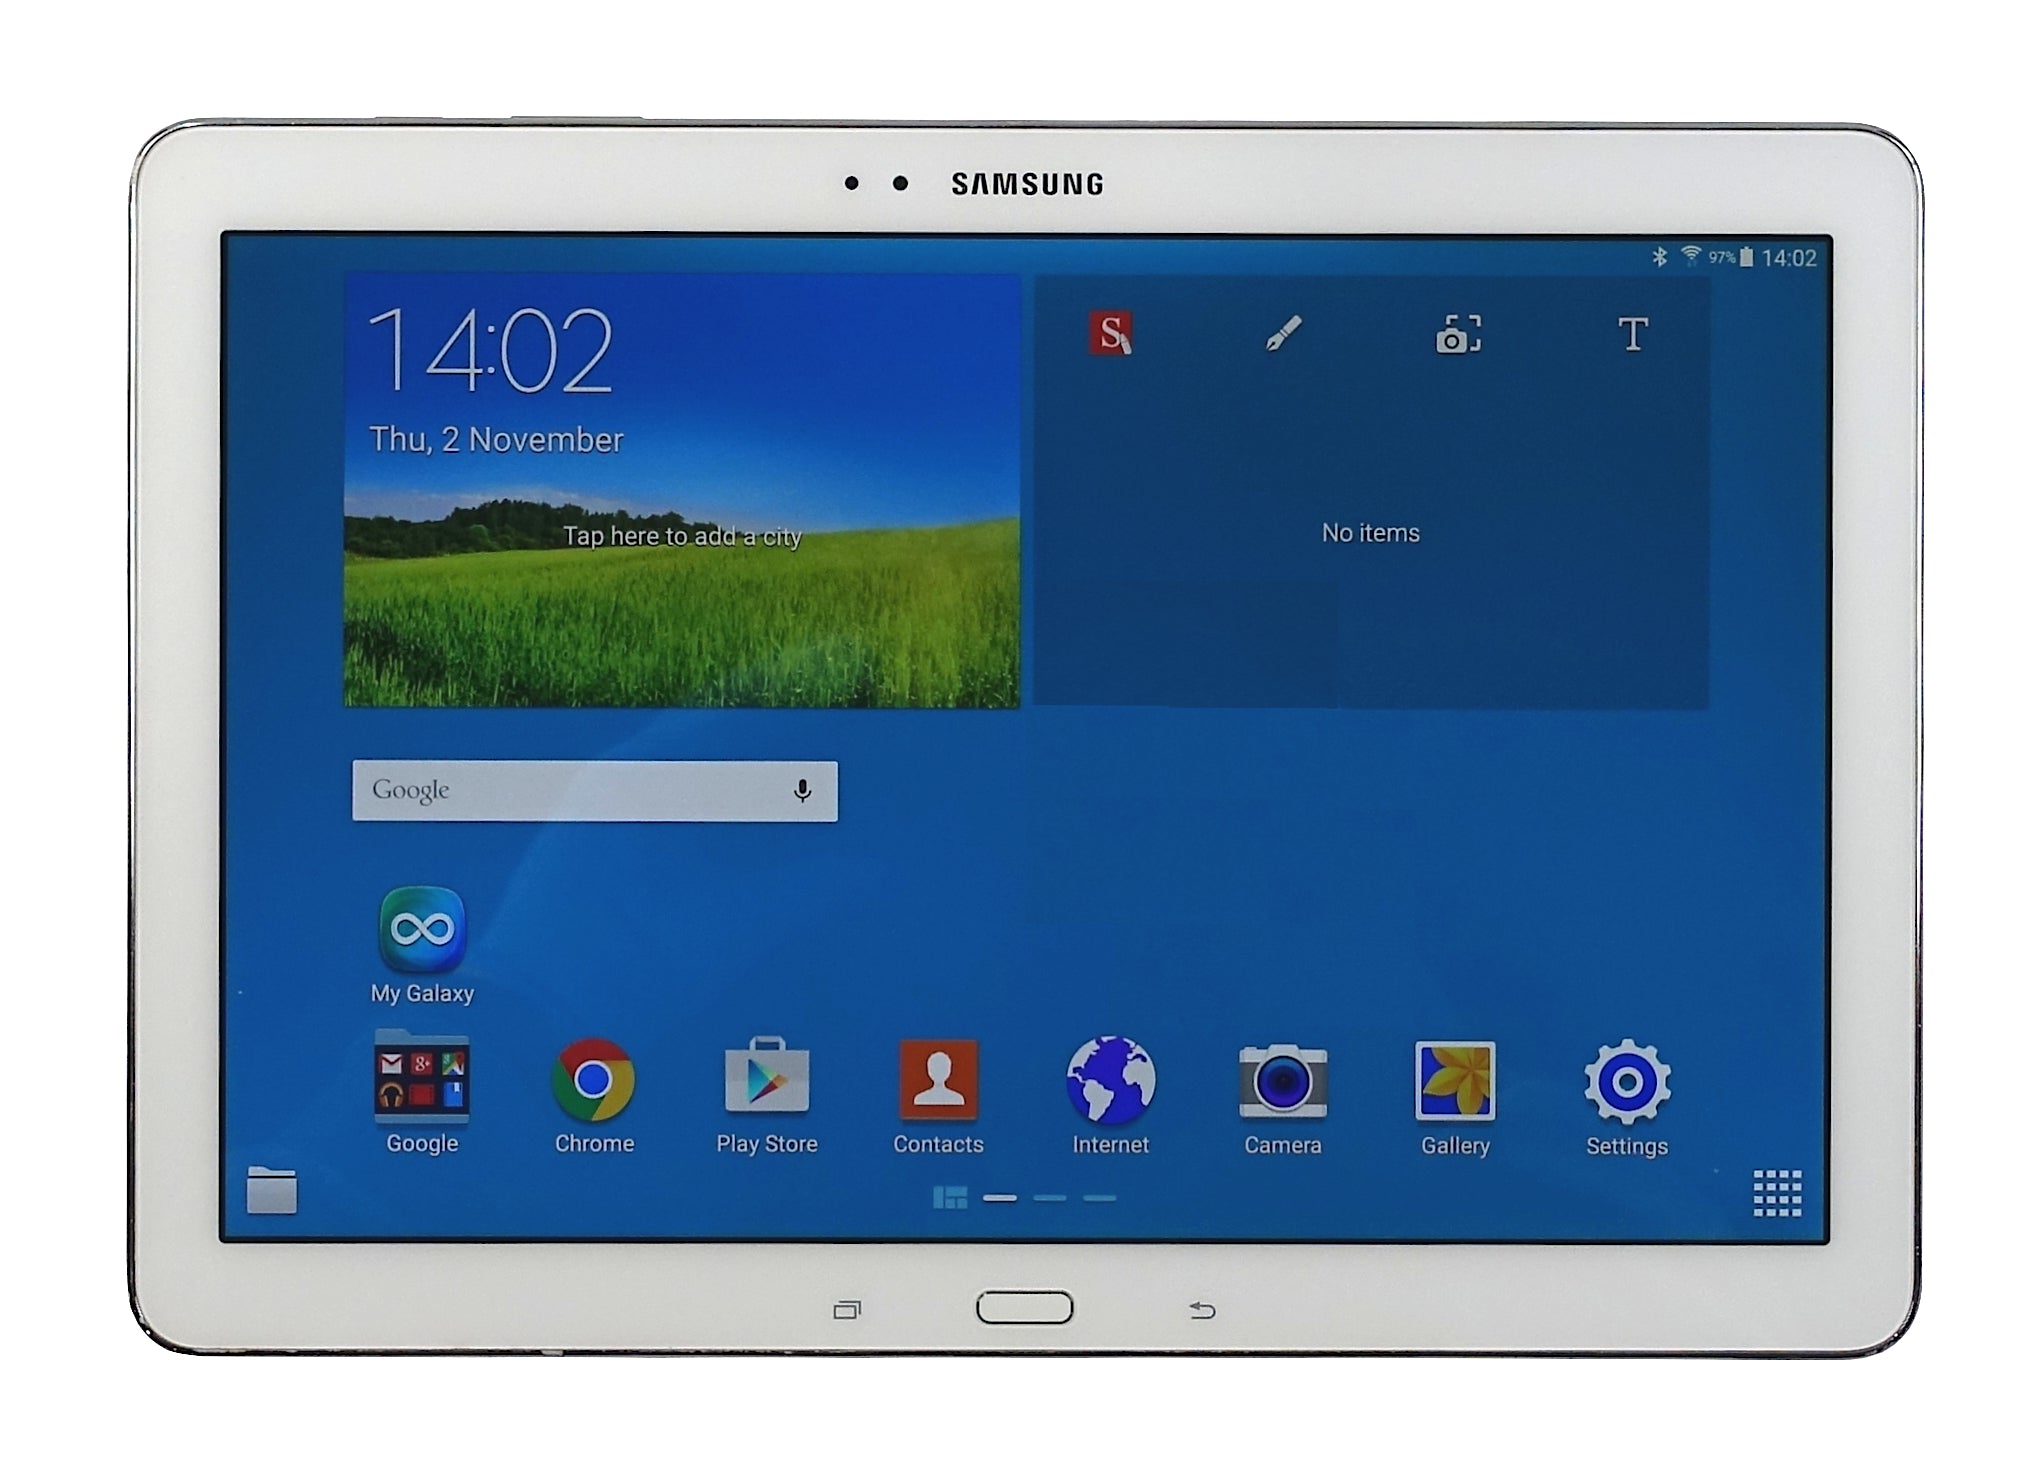 Samsung Galaxy Note Pro 12.2" Tablet, 32GB, WiFi, White, SM-P900